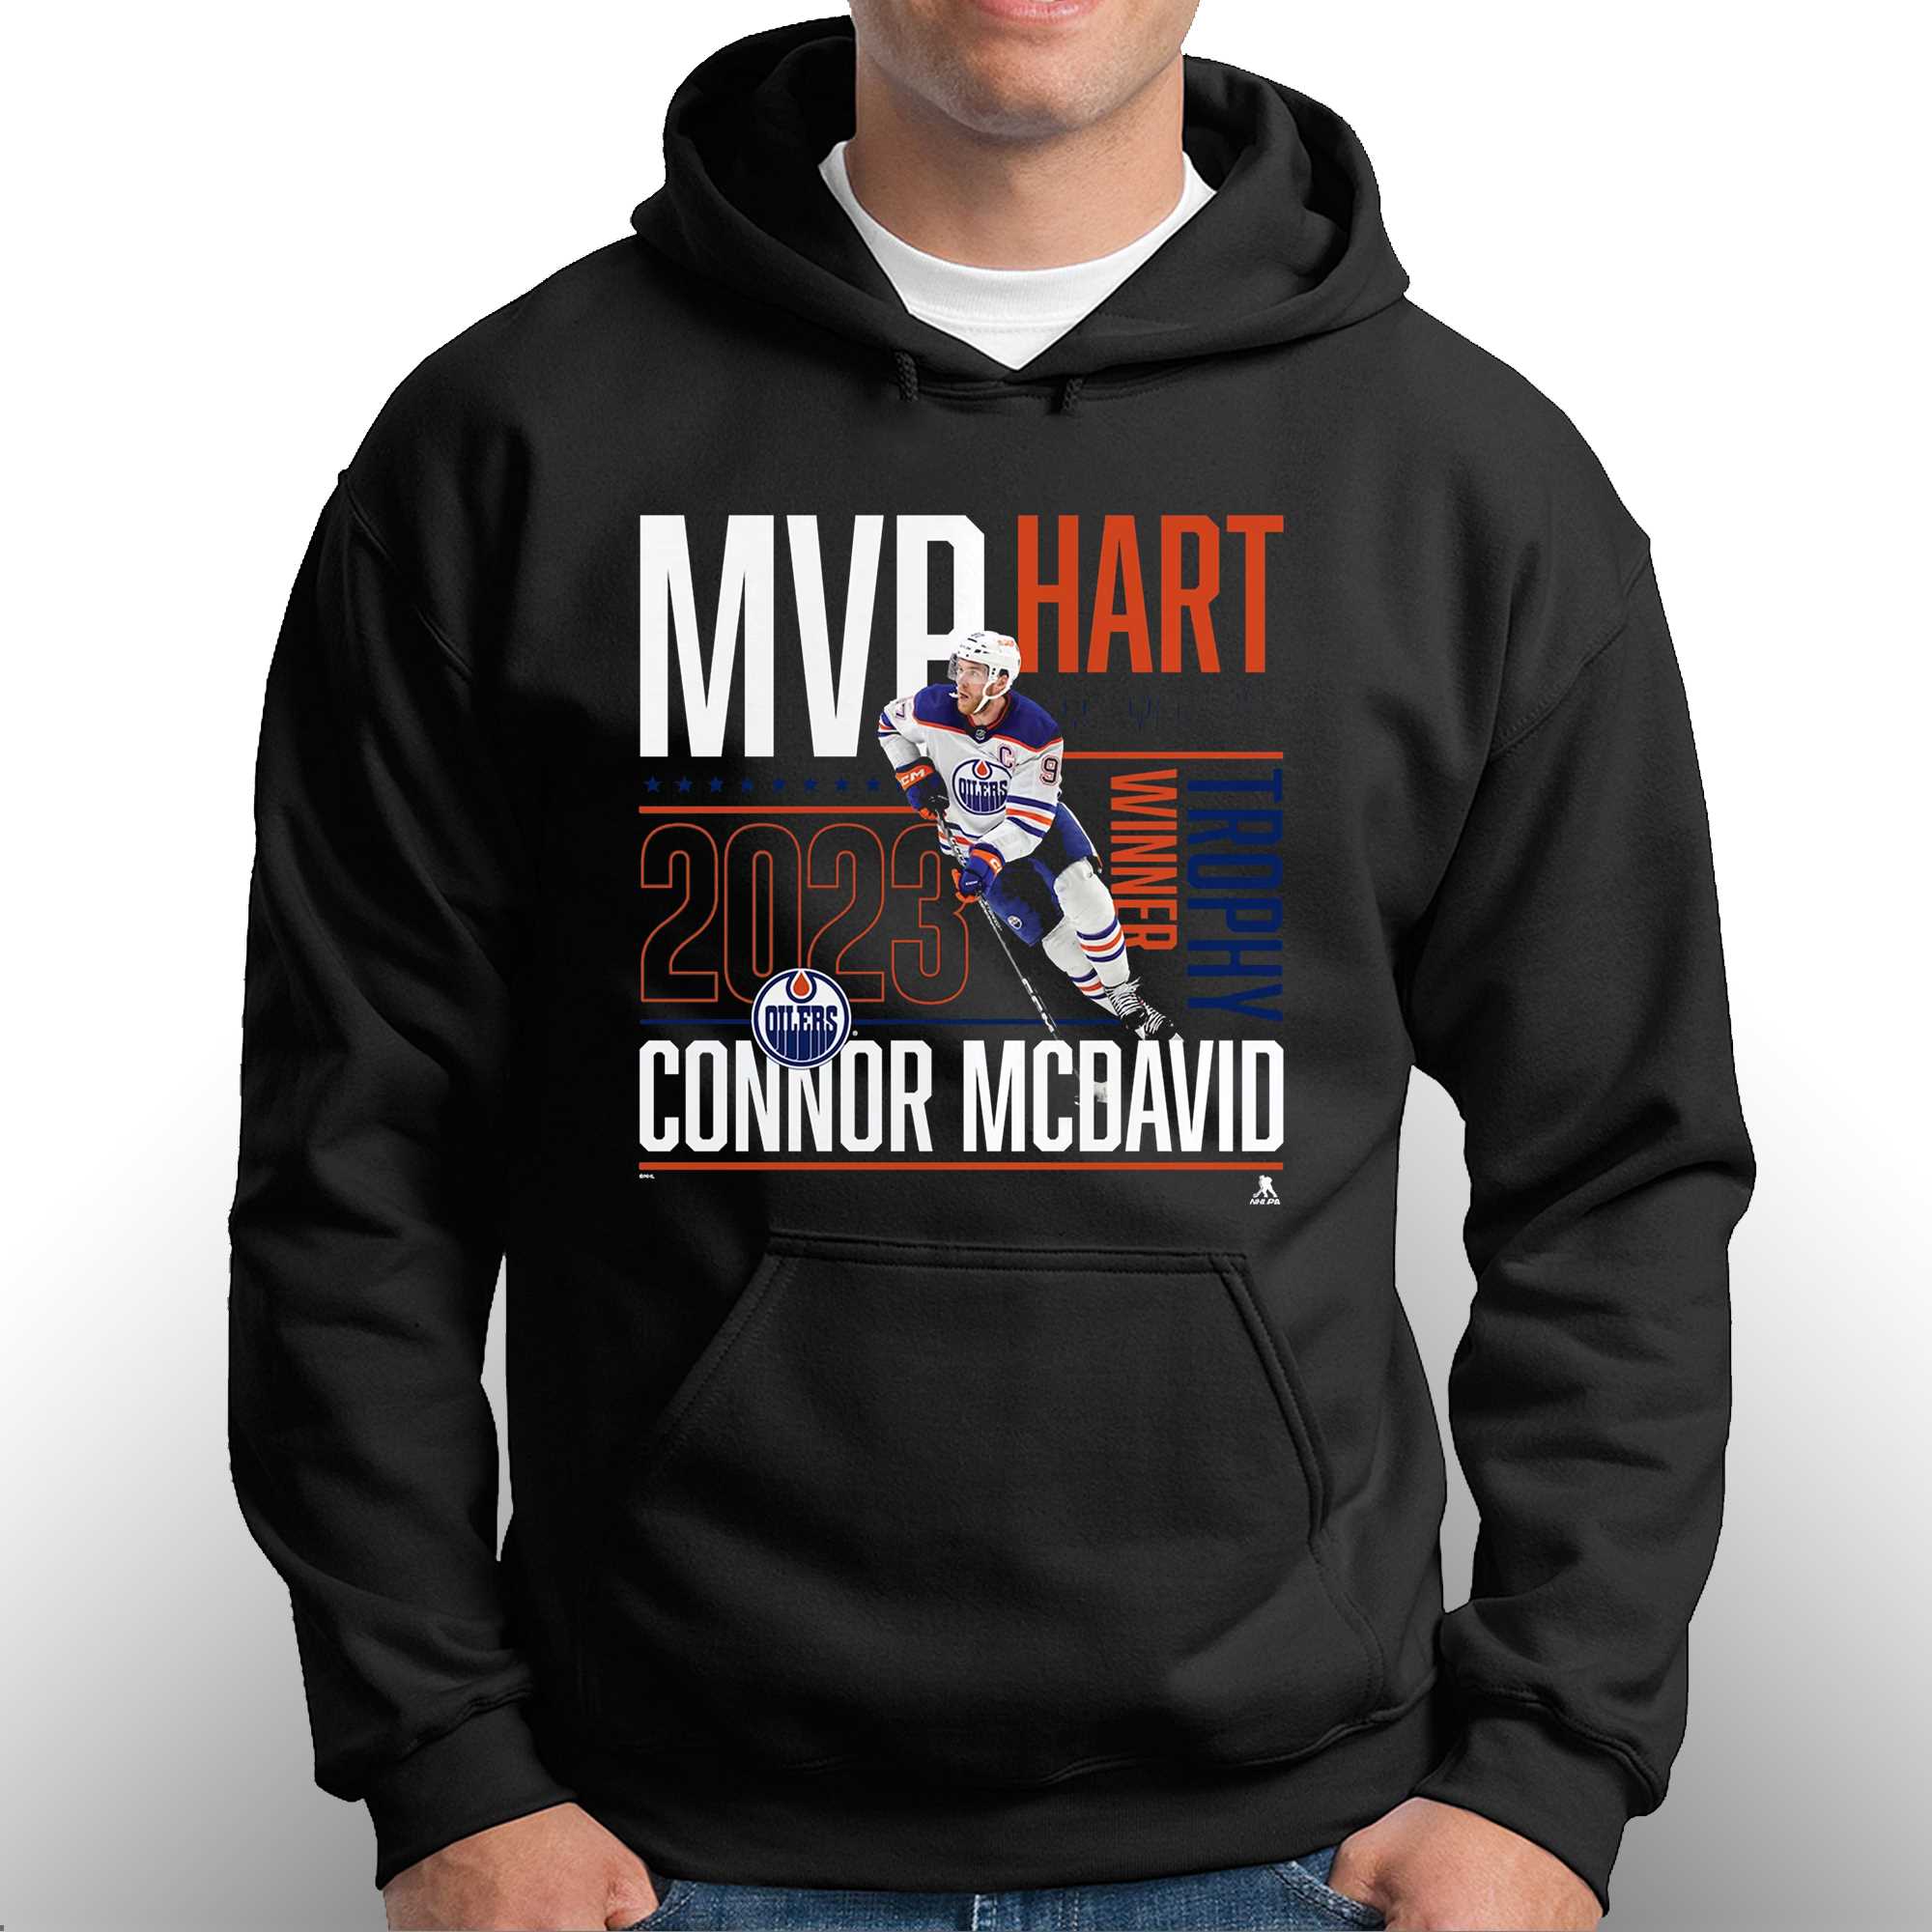 Connor McDavid Jerseys, Connor McDavid Shirts, Apparel, Gear